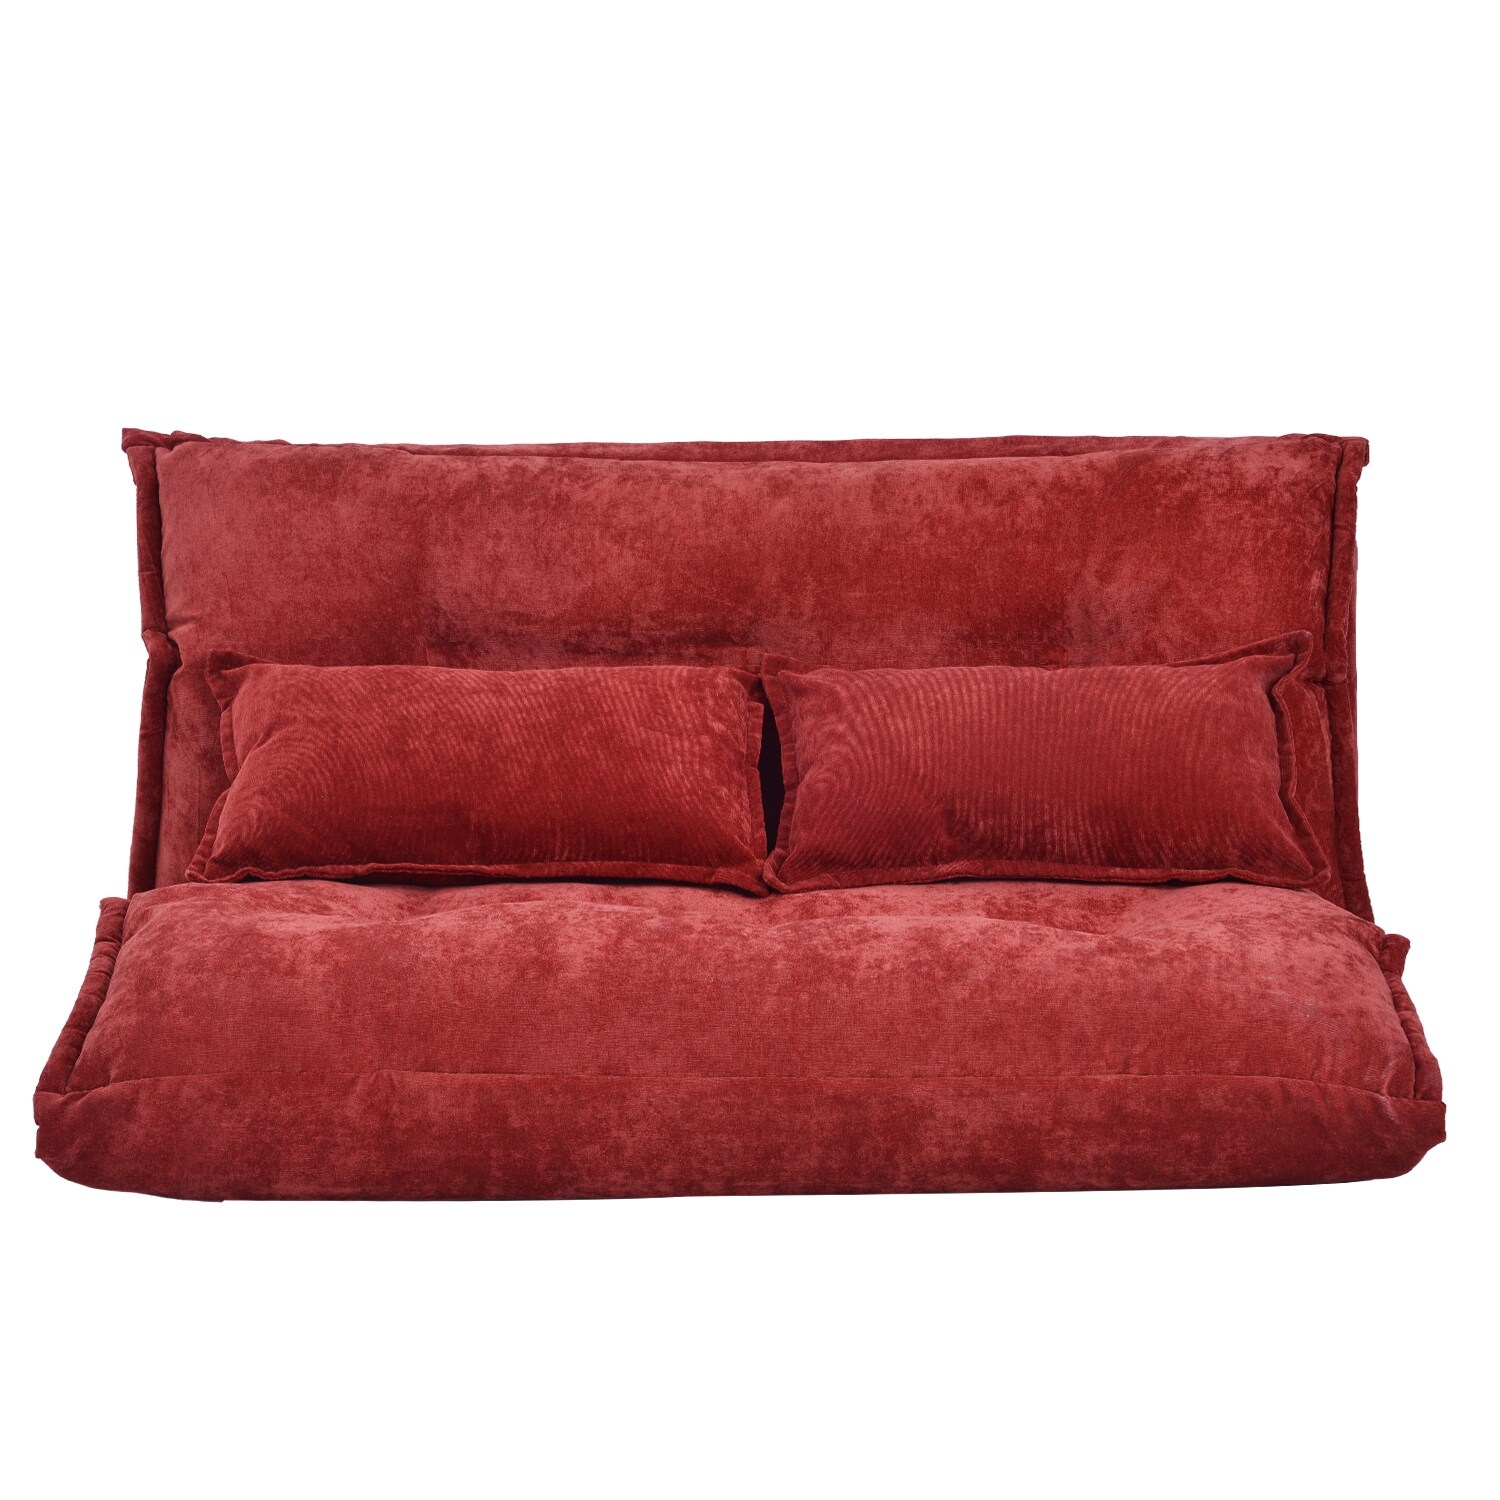 Sleeper Sofa Adjustable Folding Futon Sofa Leisure Sofa Bed with 2 Pillows, Red